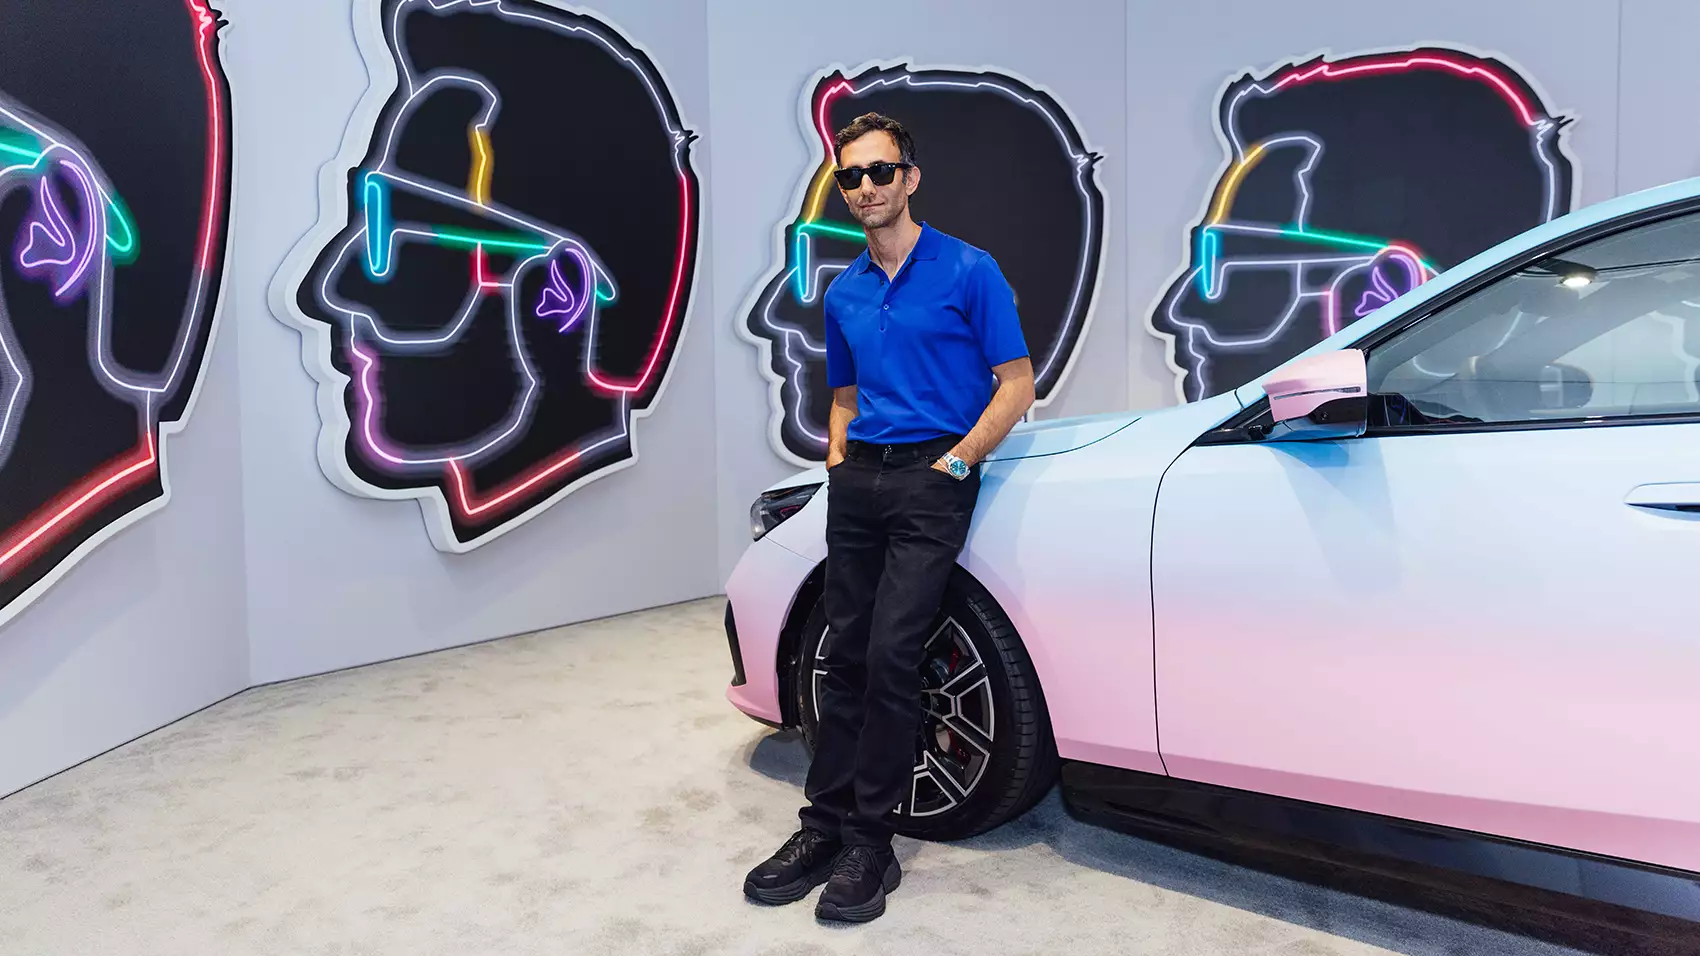 BMW and Alex Israel Unveil REMEMBR at Art Basel Miami Beach 2023